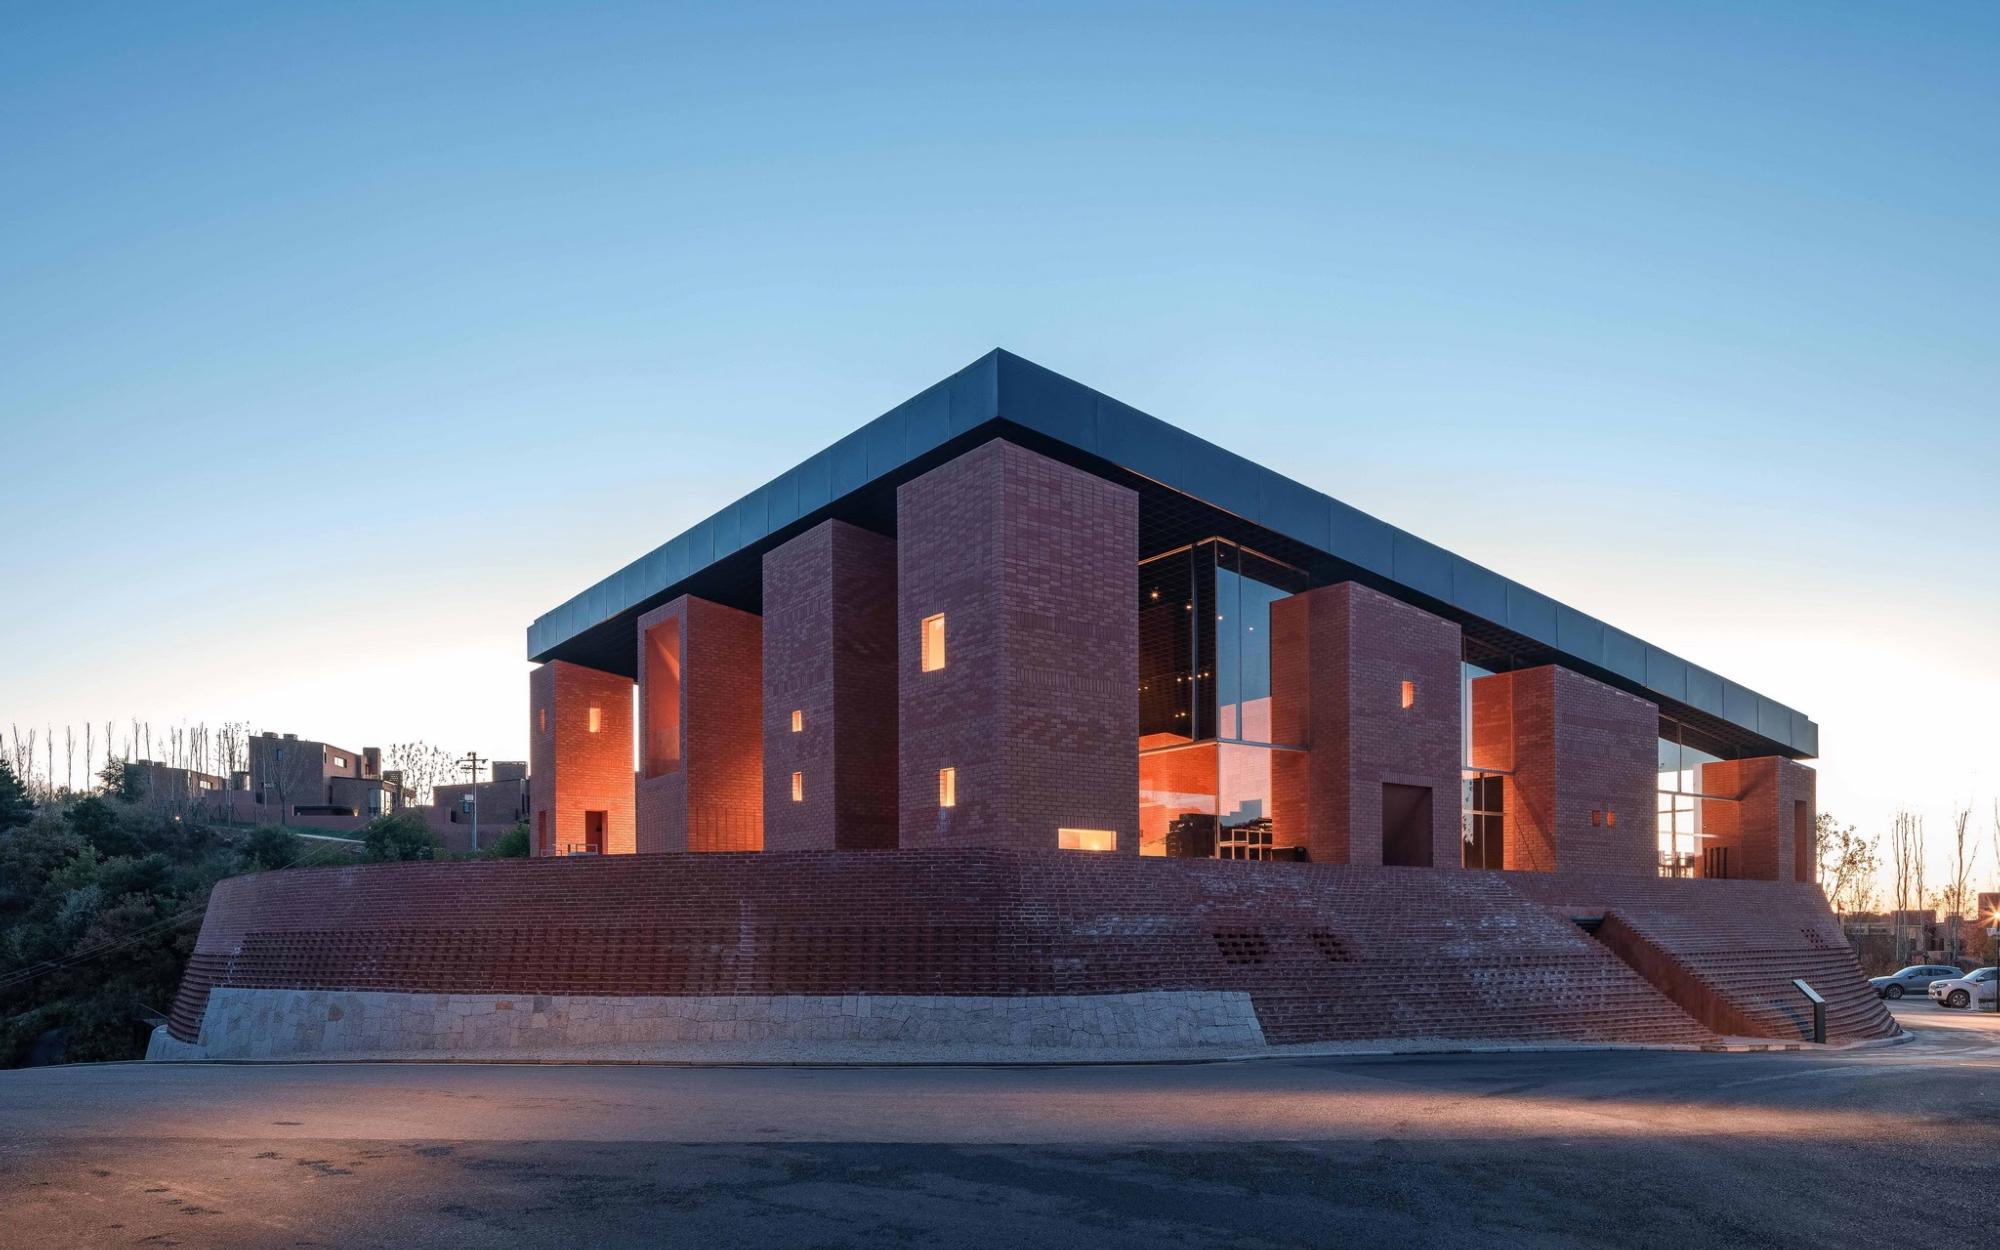 The red brick exterior of the Art Center of Aranya